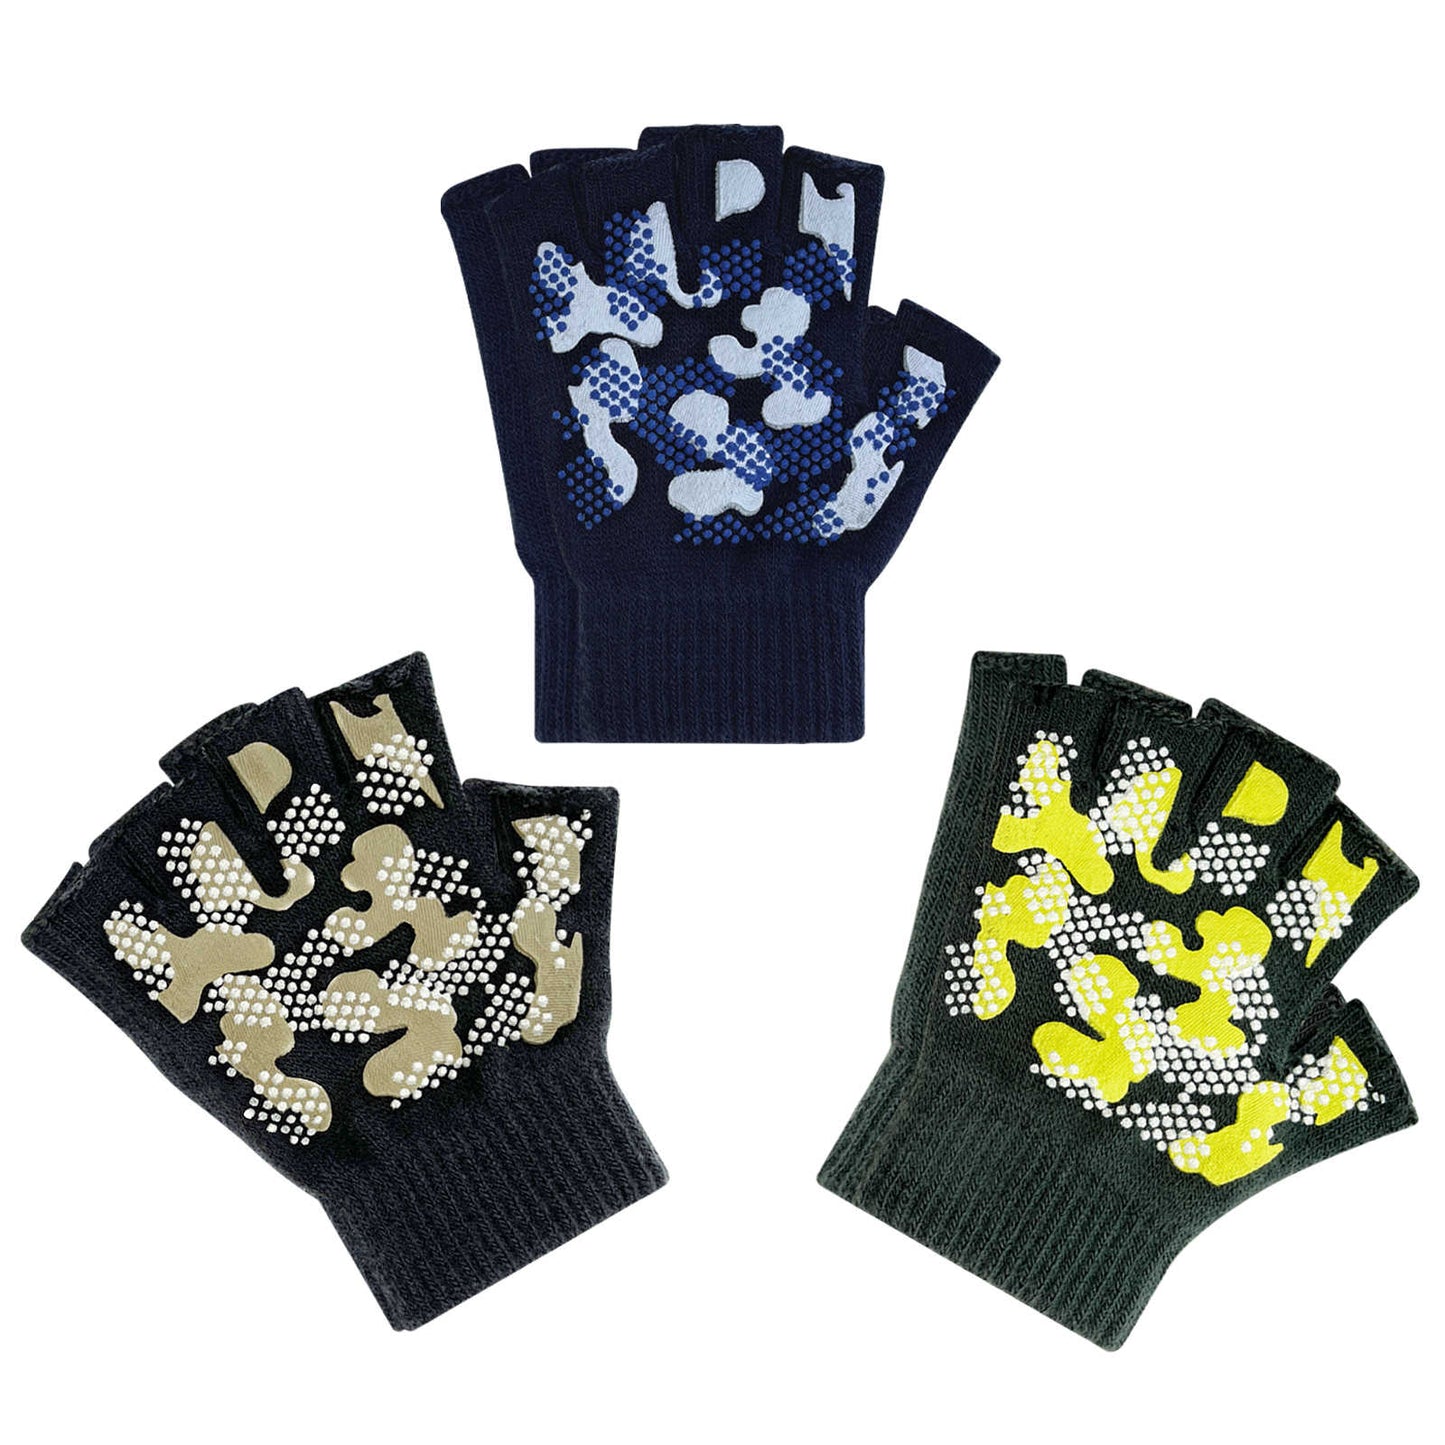 Evridwear Kids Fingerless Winter Warm Gloves,3 Pairs Half Finger Knitted Magic Stretch Gripper Glove